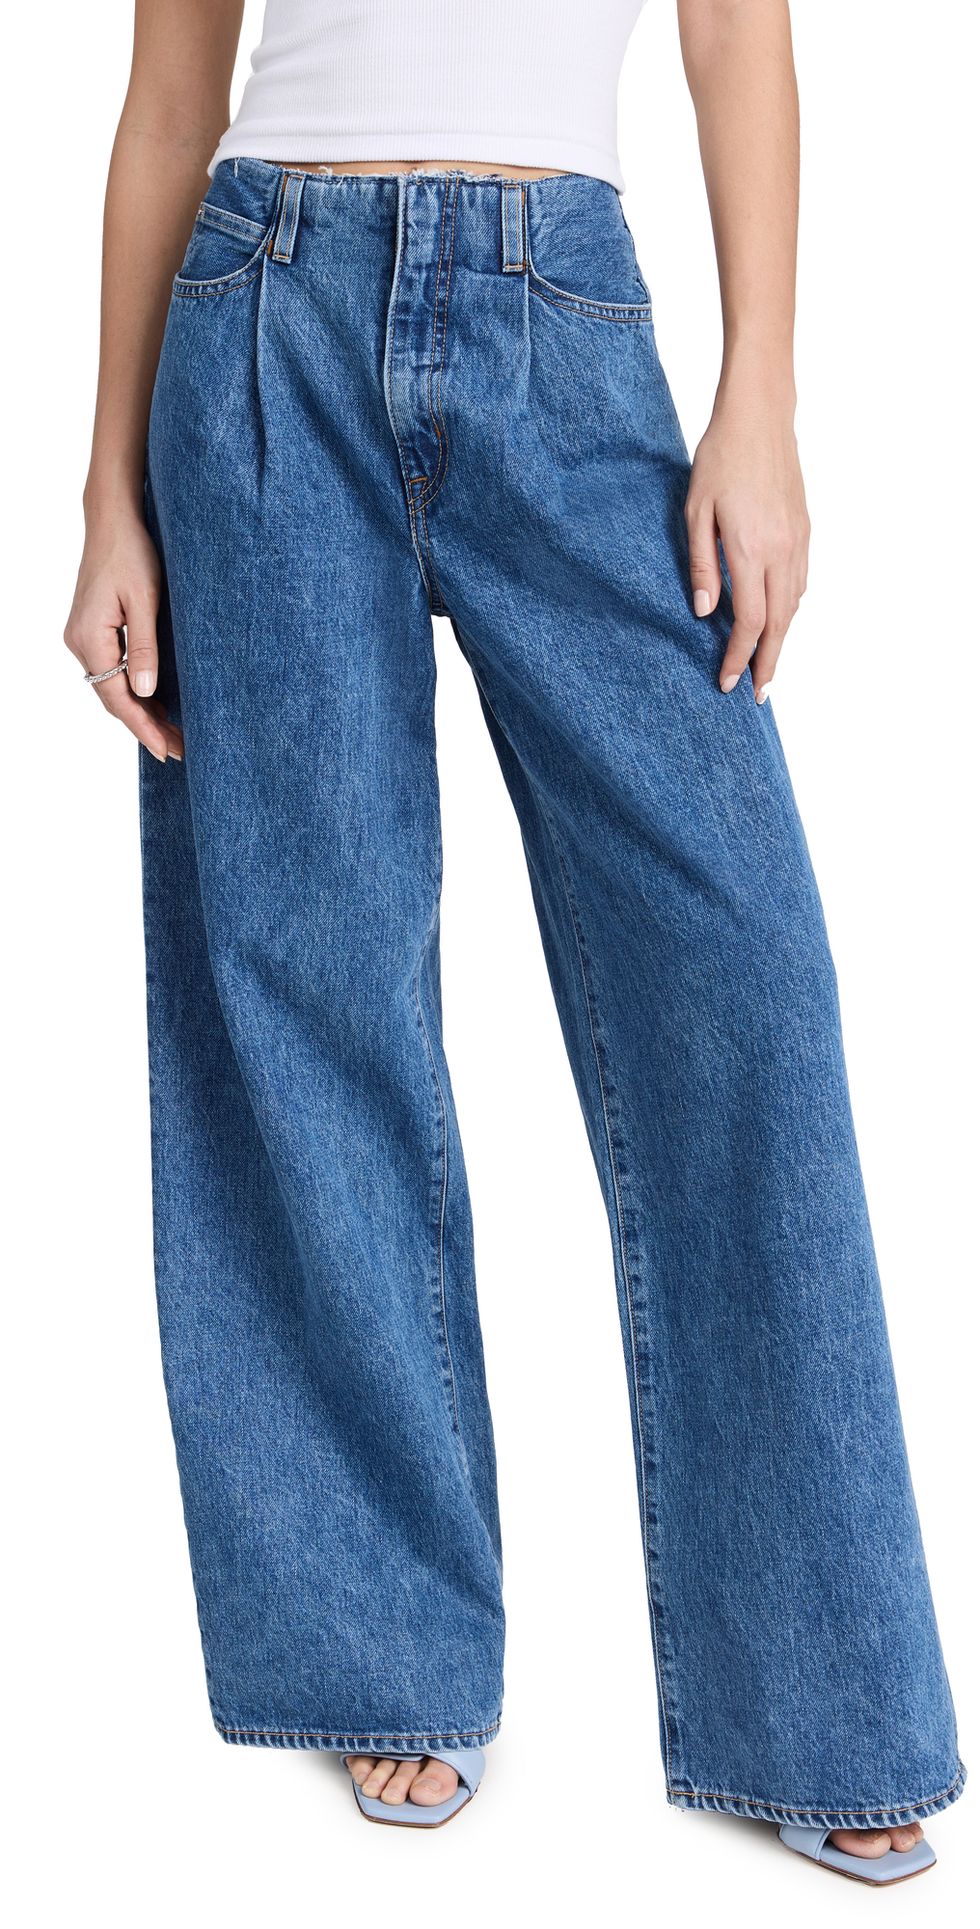 Kids Jeans Fashion Hole Design Bell Bottom Girl's Denim Pants,6M